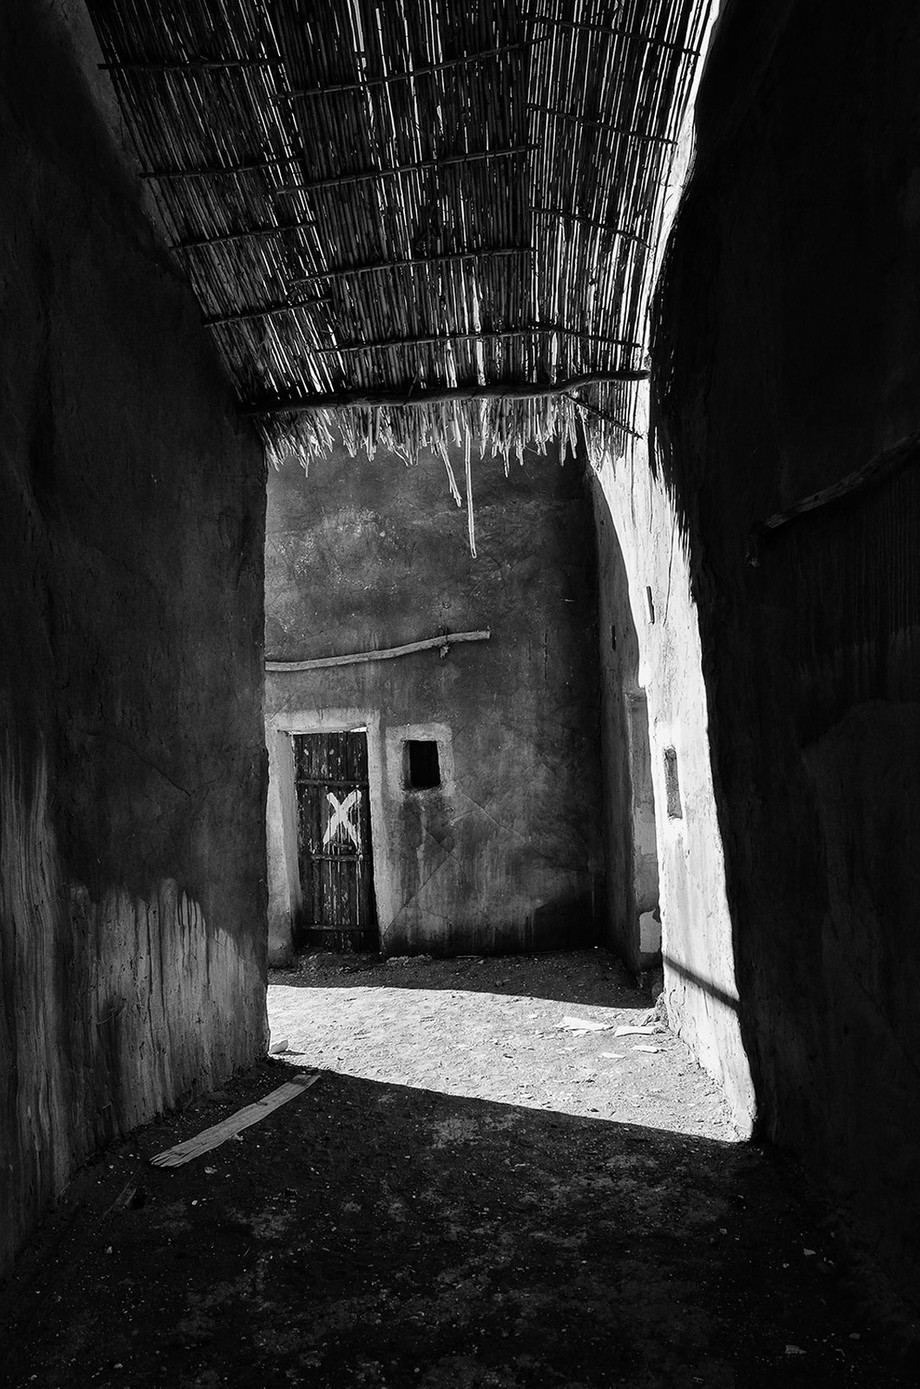 Shadows by vladimirchuyko - Doors Photo Contest